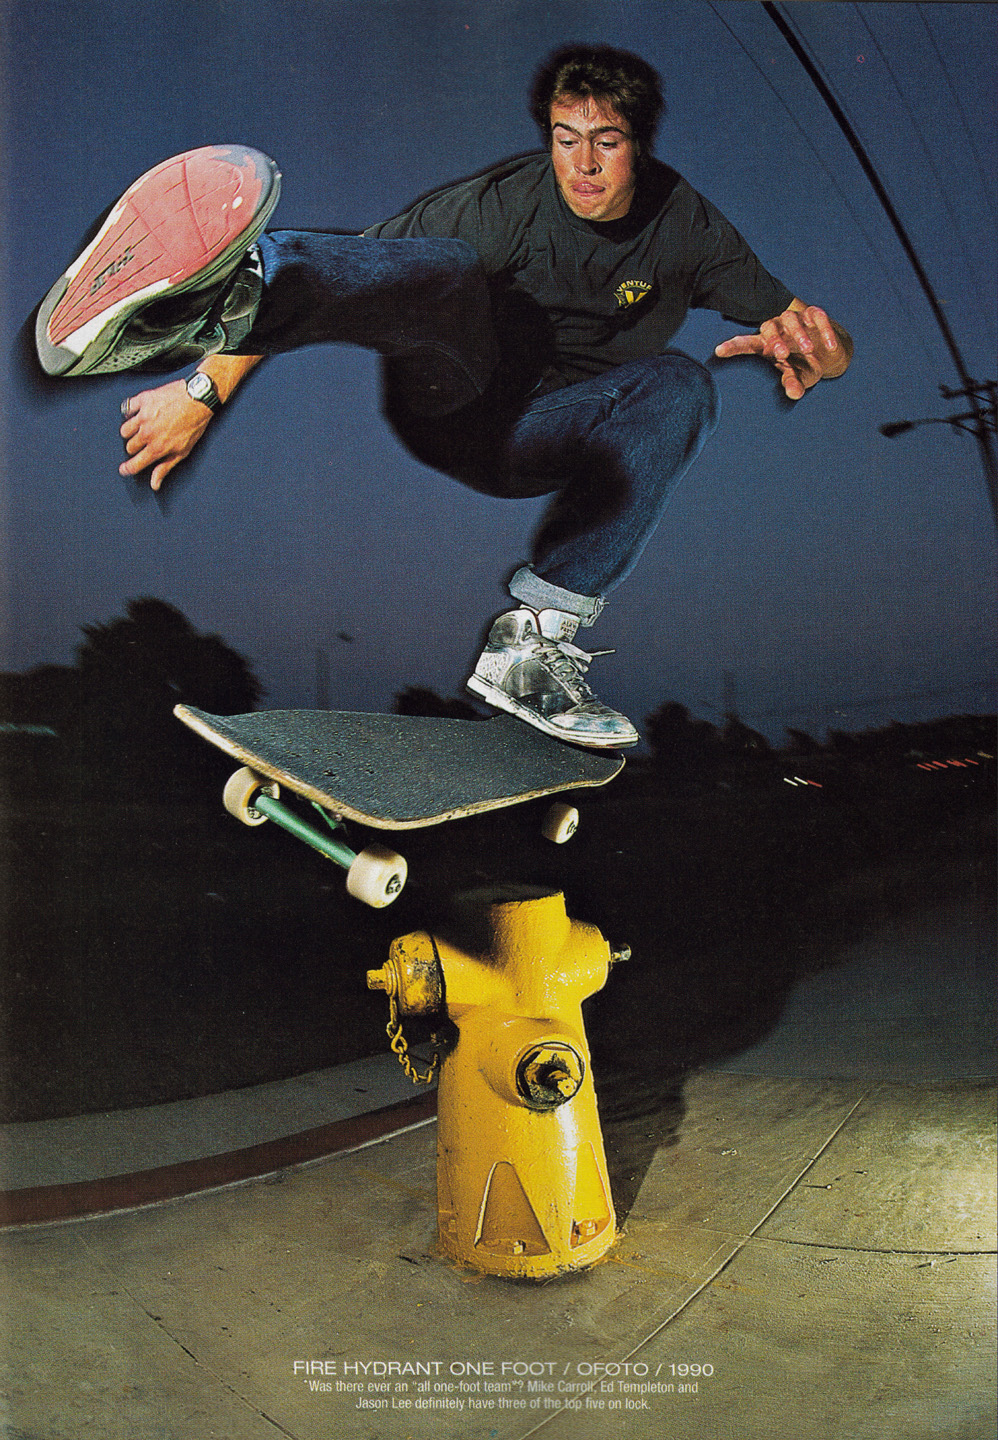 Jason Lee Skateboarding 360 Flip